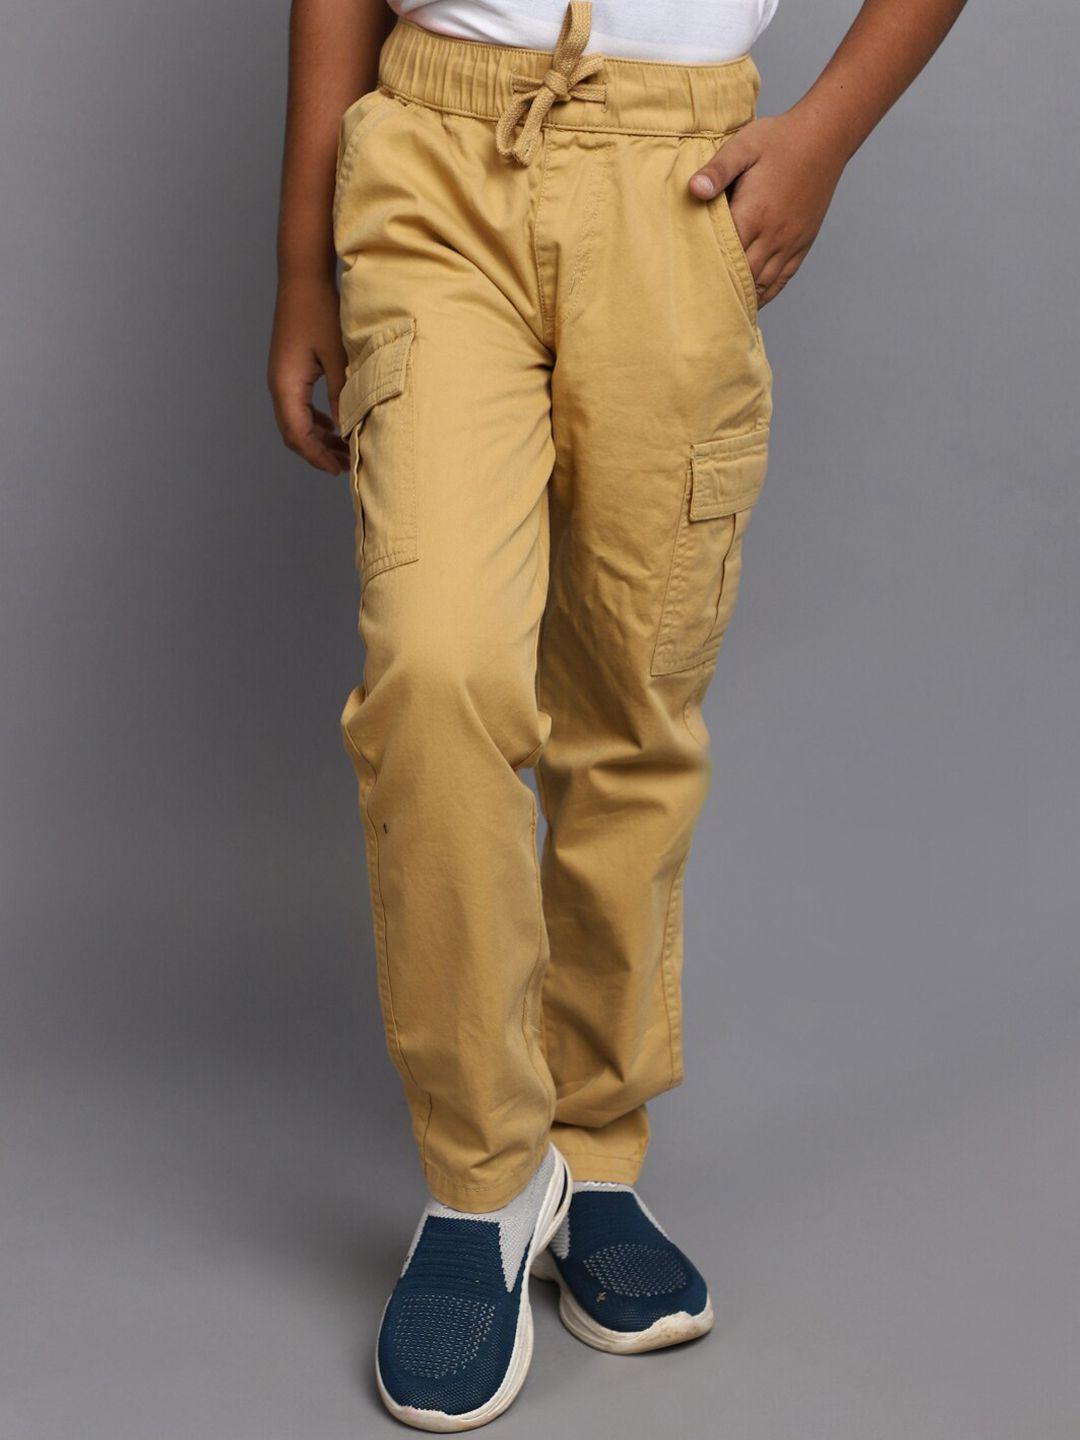 v-mart boys cotton cargos trousers